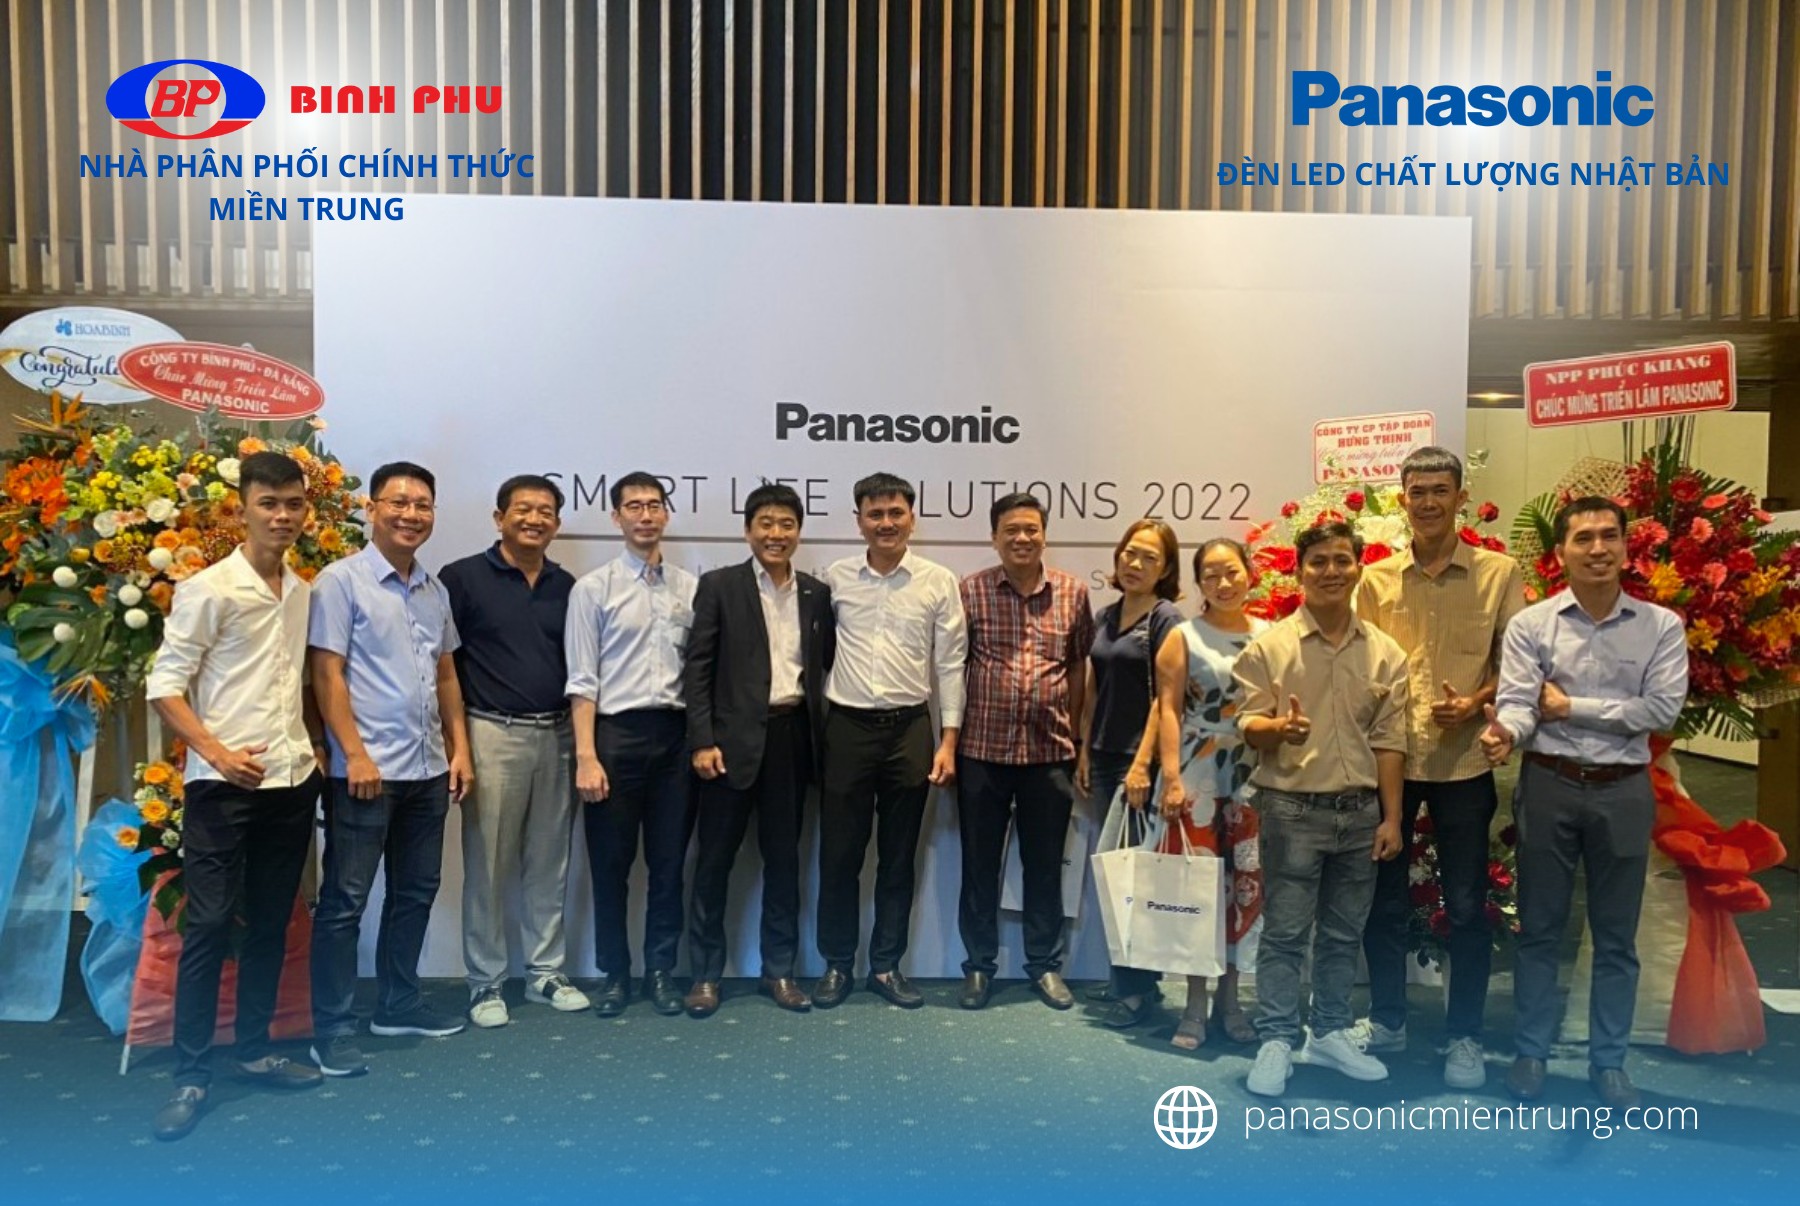 Panasonic Miền Trung Life Solutions 2022 Vietnam